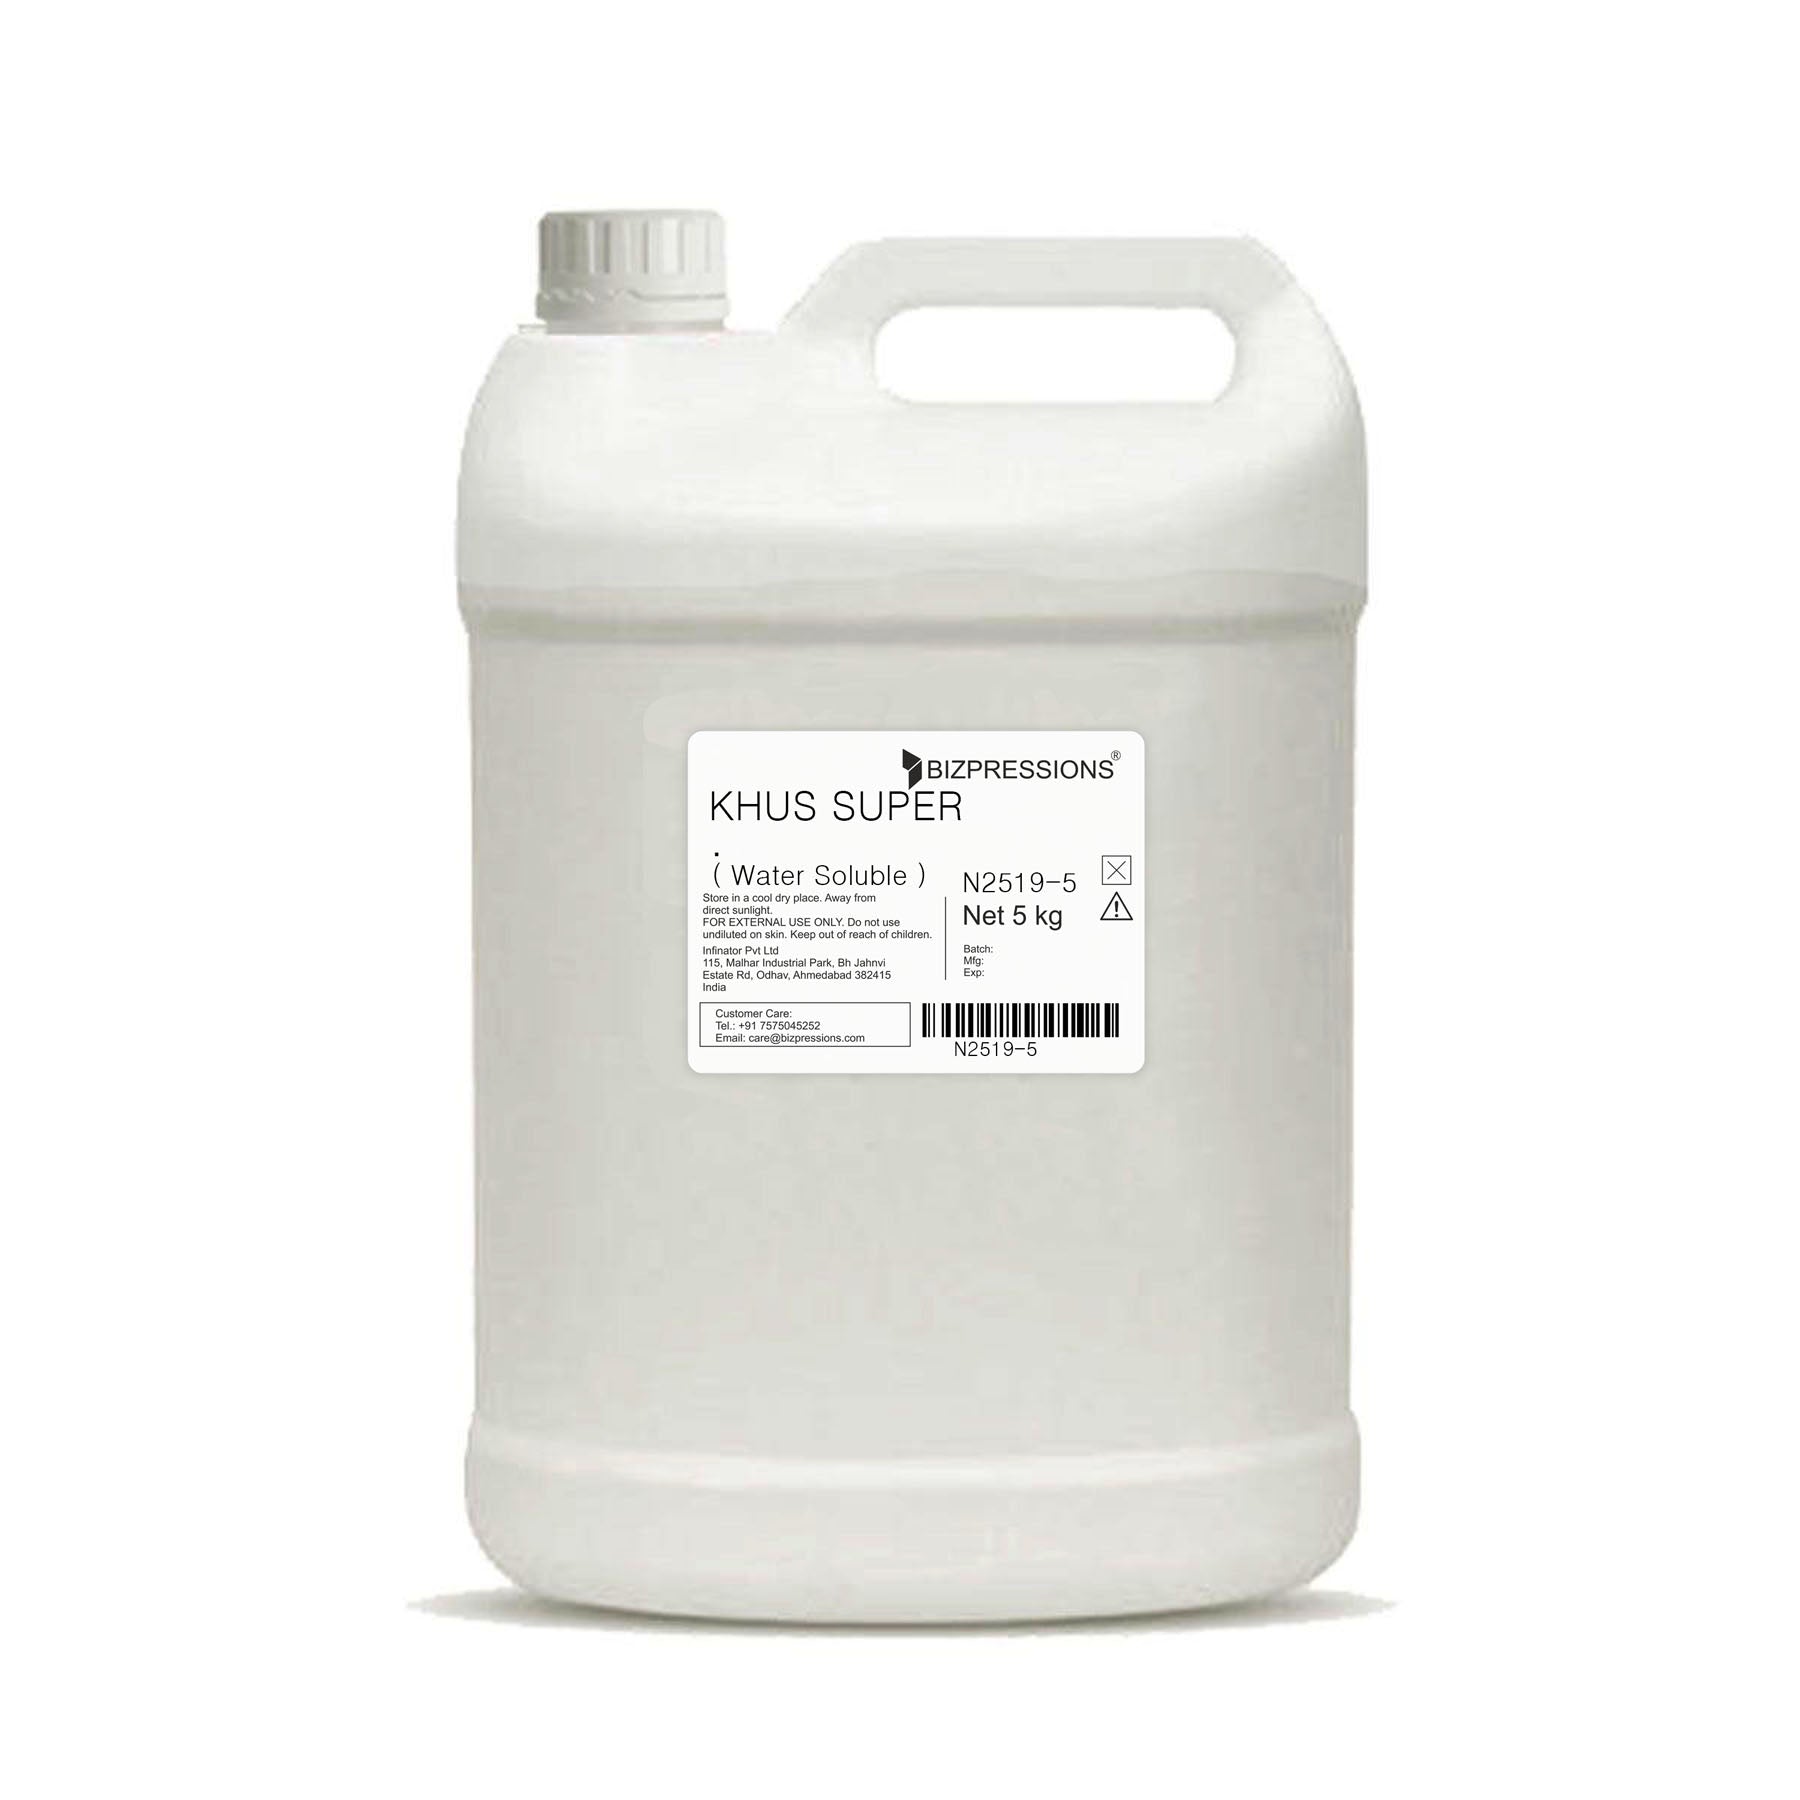 KHUS SUPER W/S - Fragrance ( Water Soluble ) - 5 kg